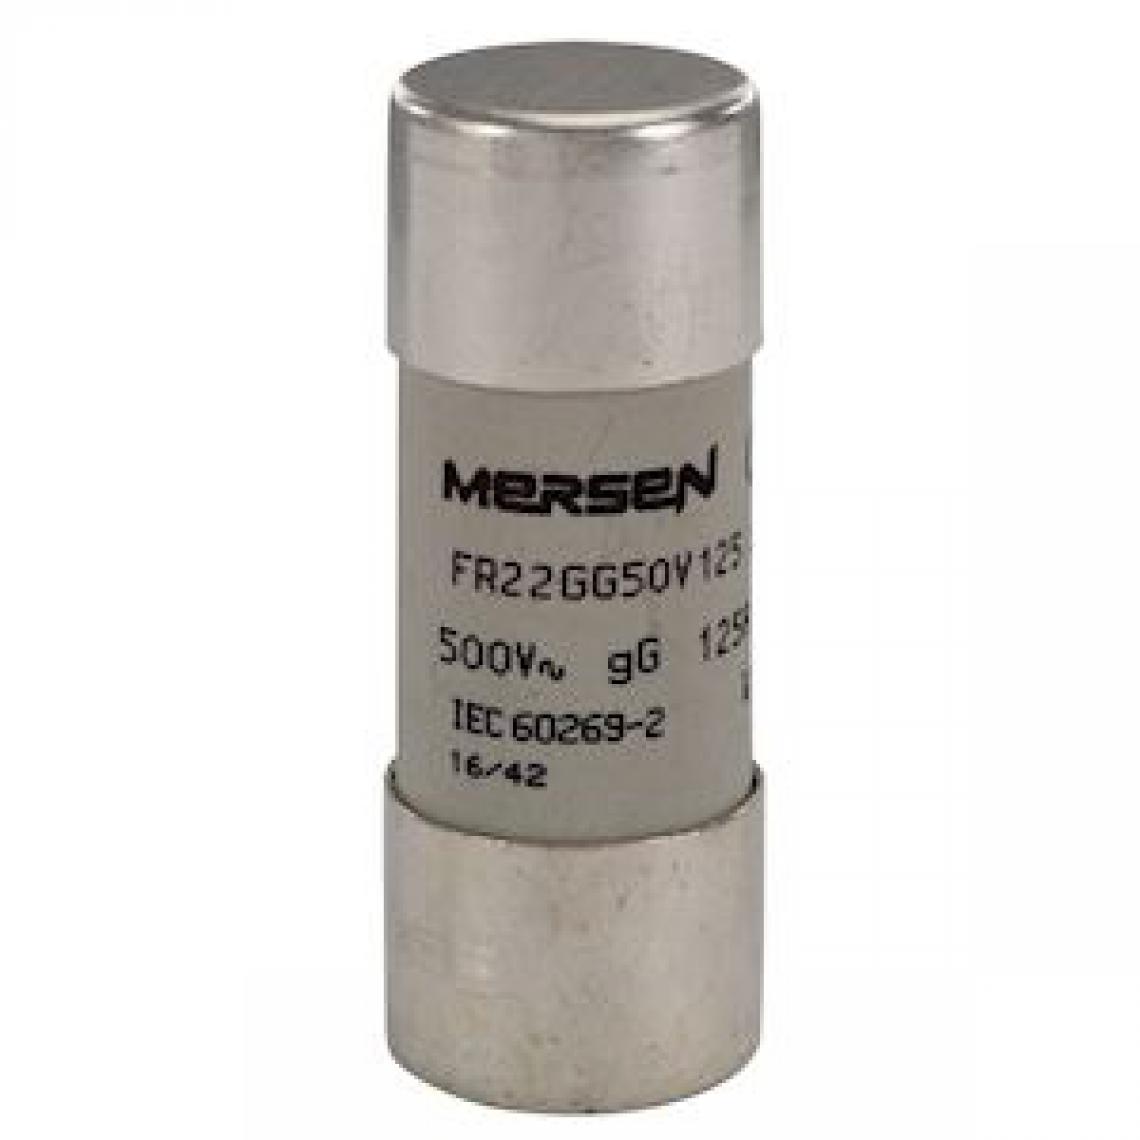 Mersen - fusible cartouche - 22 x 58 - gg - 125a - sans indicateur - 500v - mersen j219773 - Fusibles